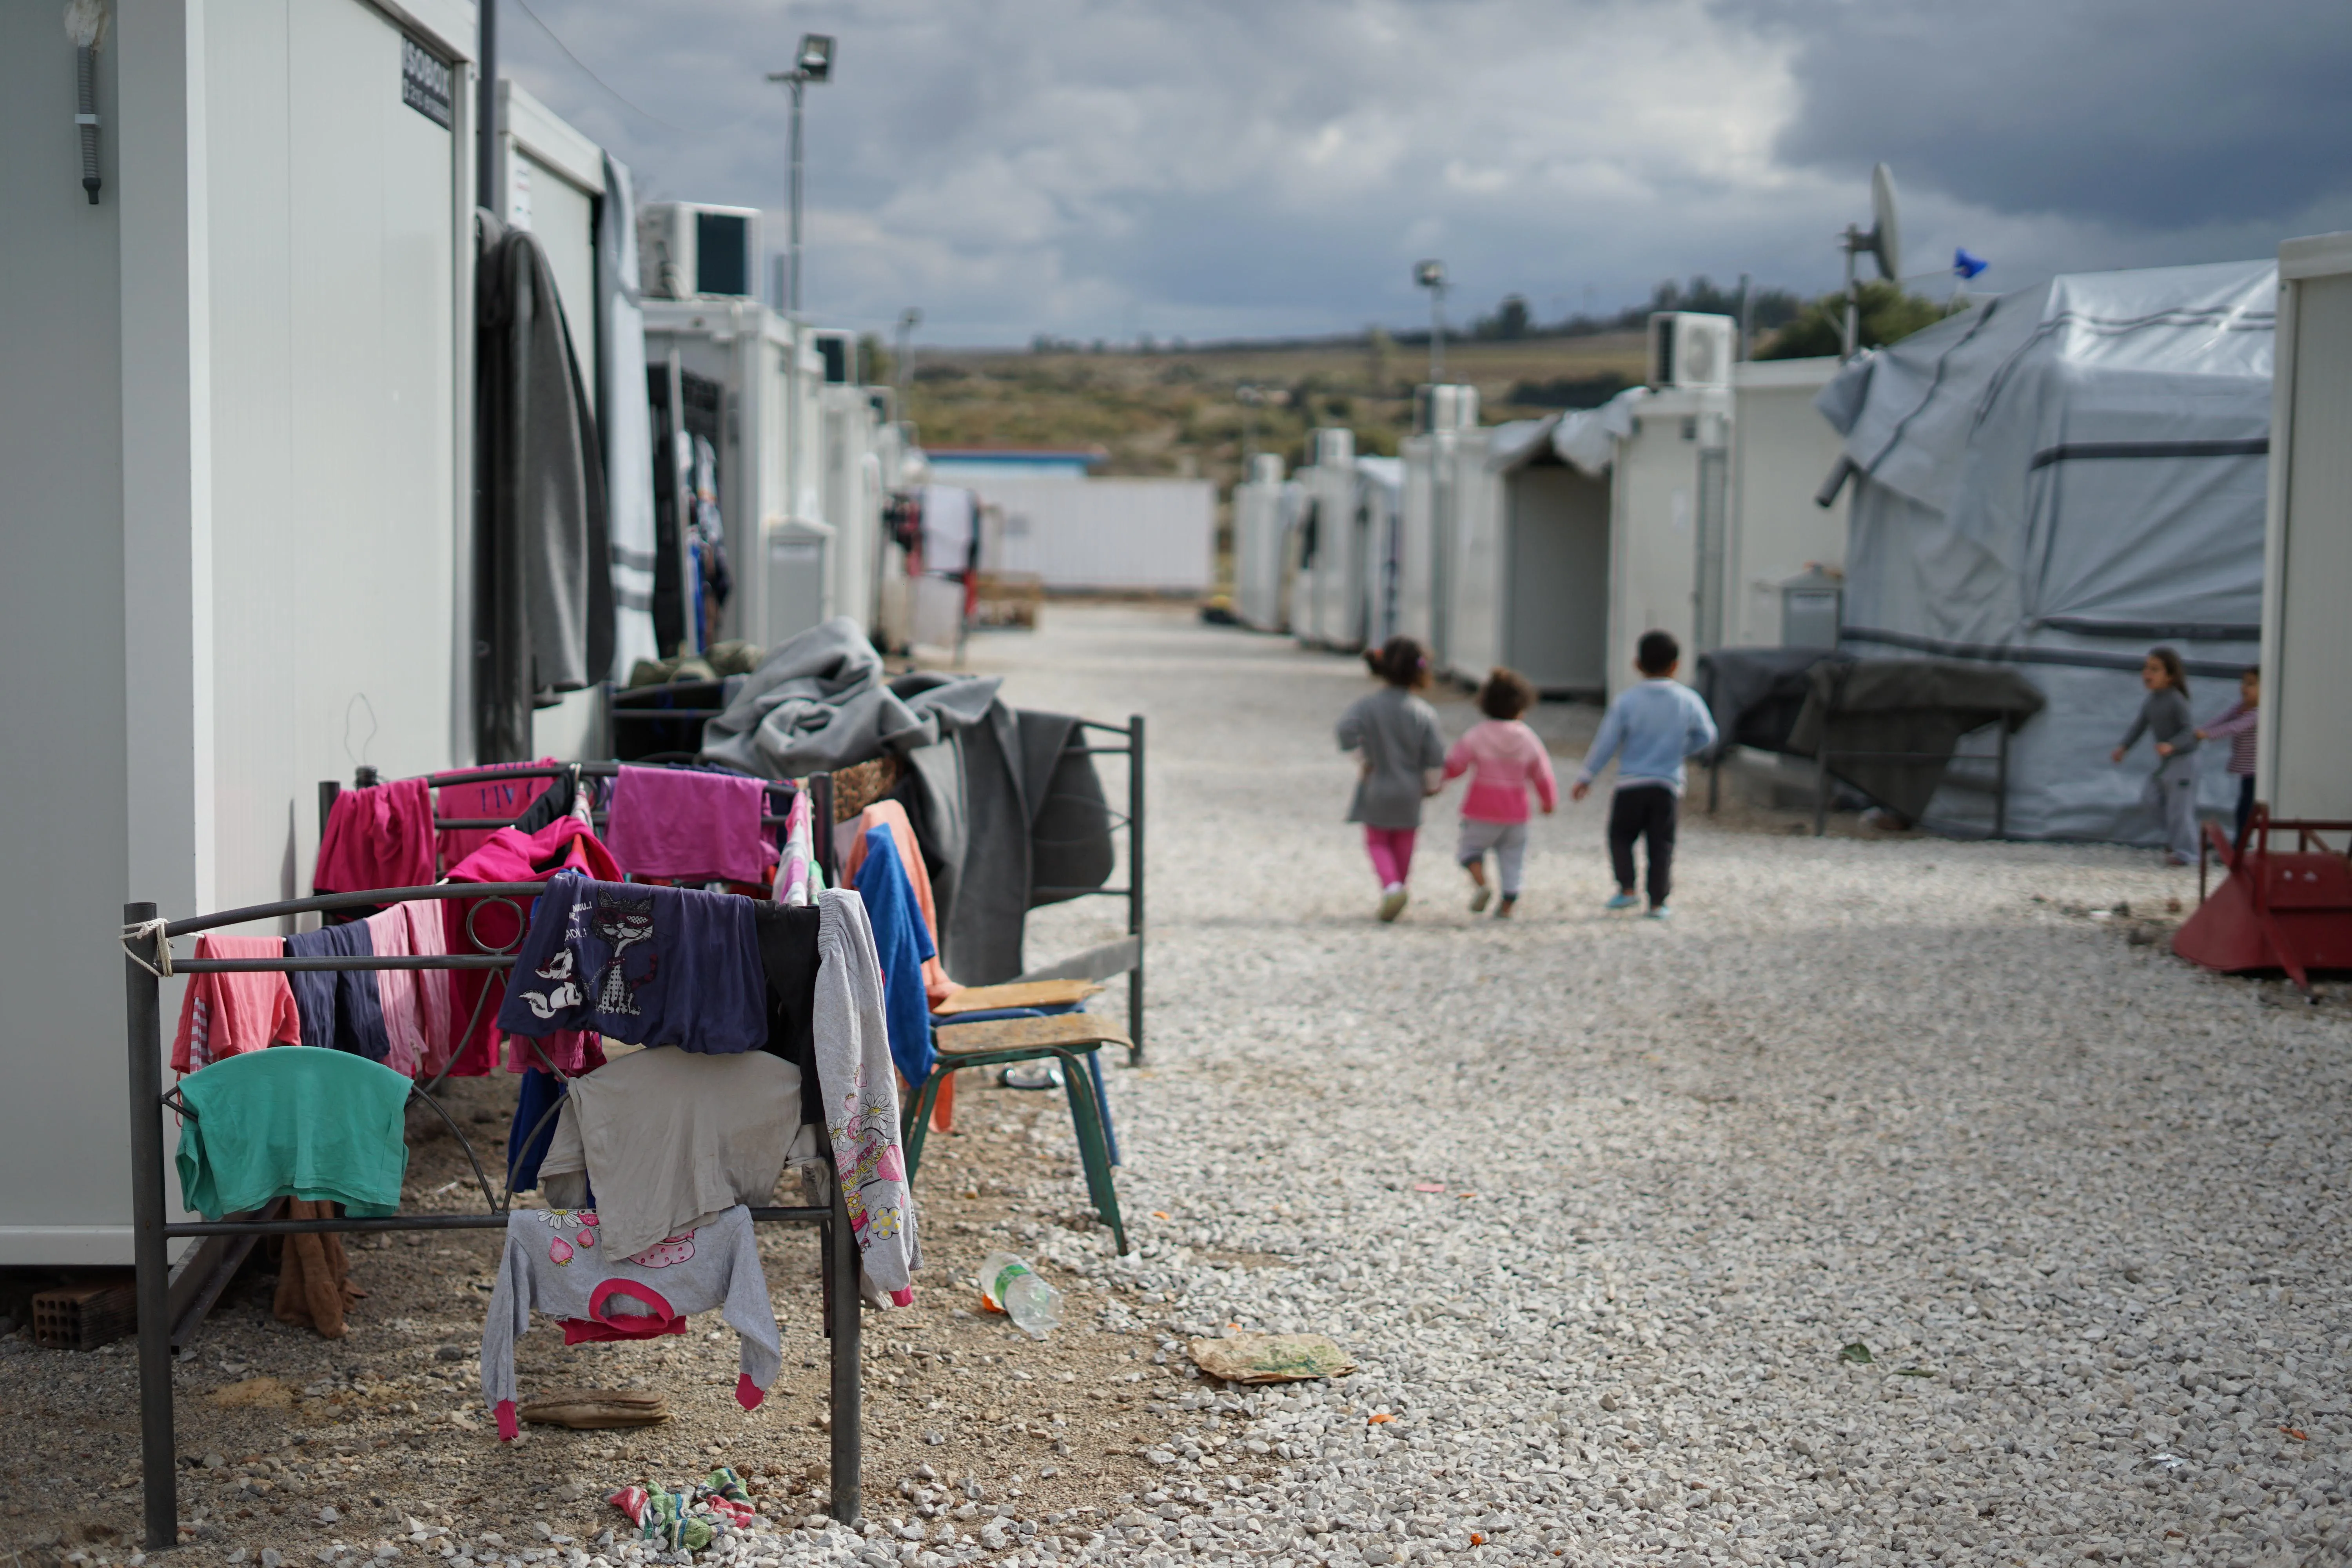 Three young children walk in a refugee camp.